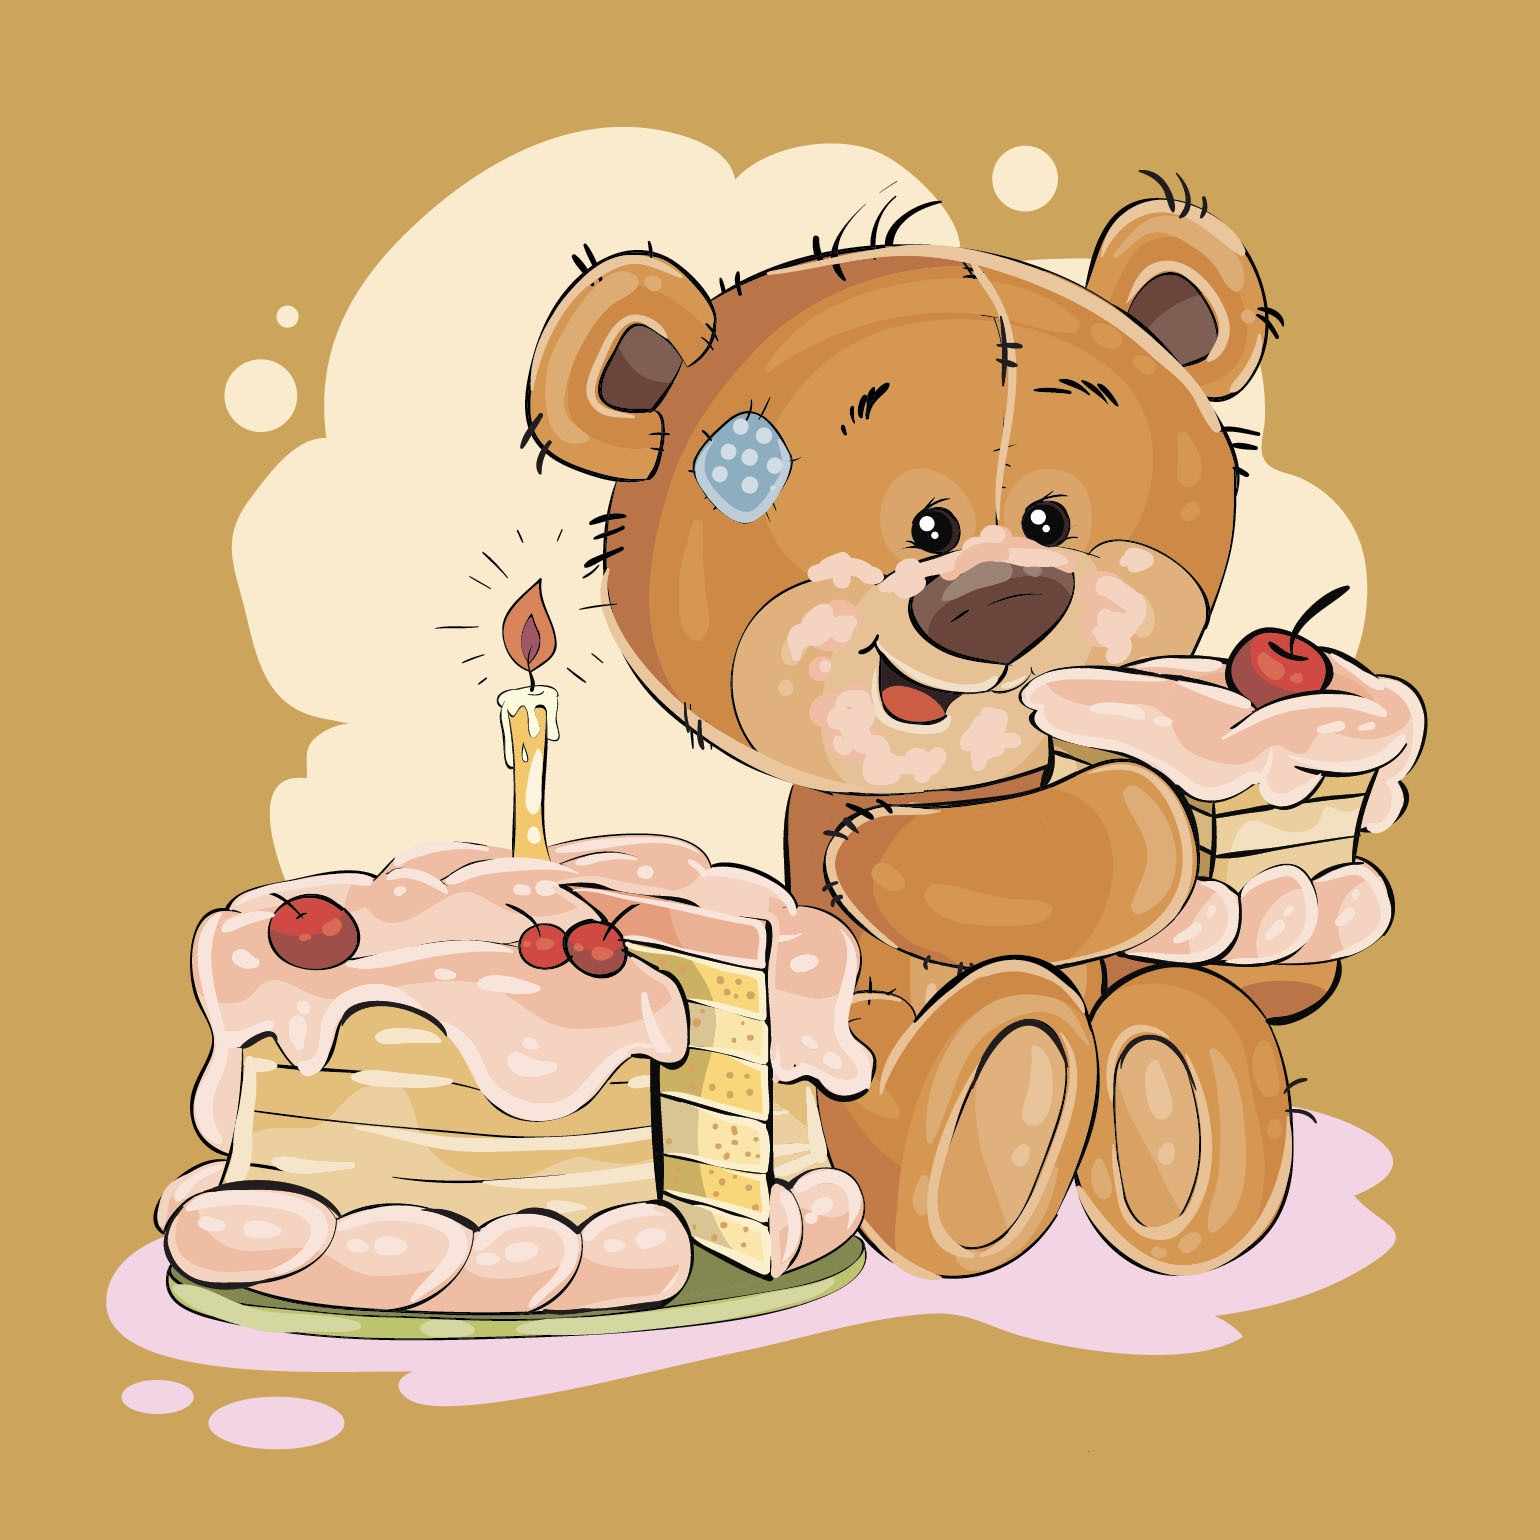 Медвежонок картинка для печати на торт